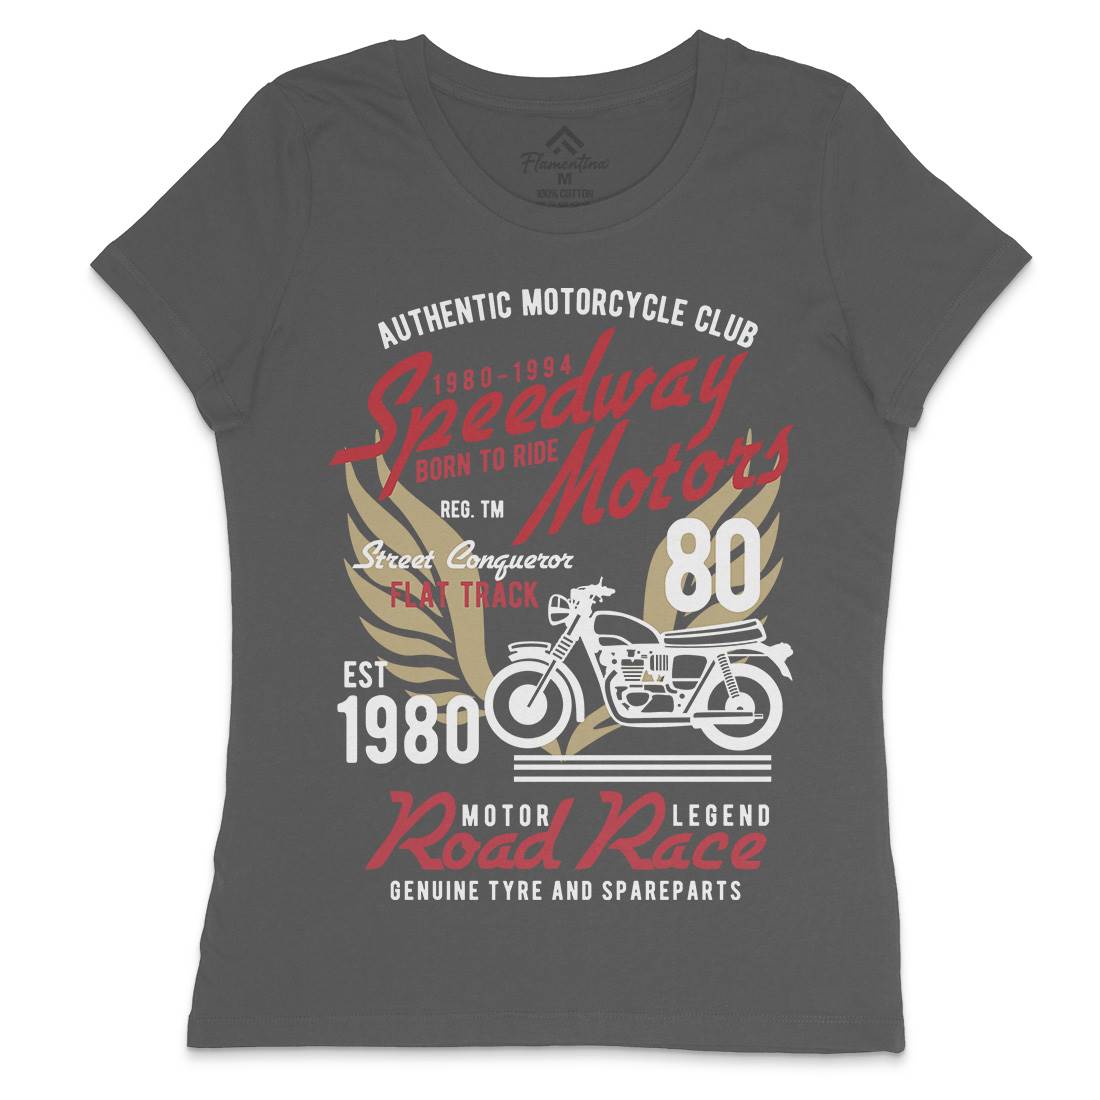 Speedways Motor Womens Crew Neck T-Shirt Motorcycles B452